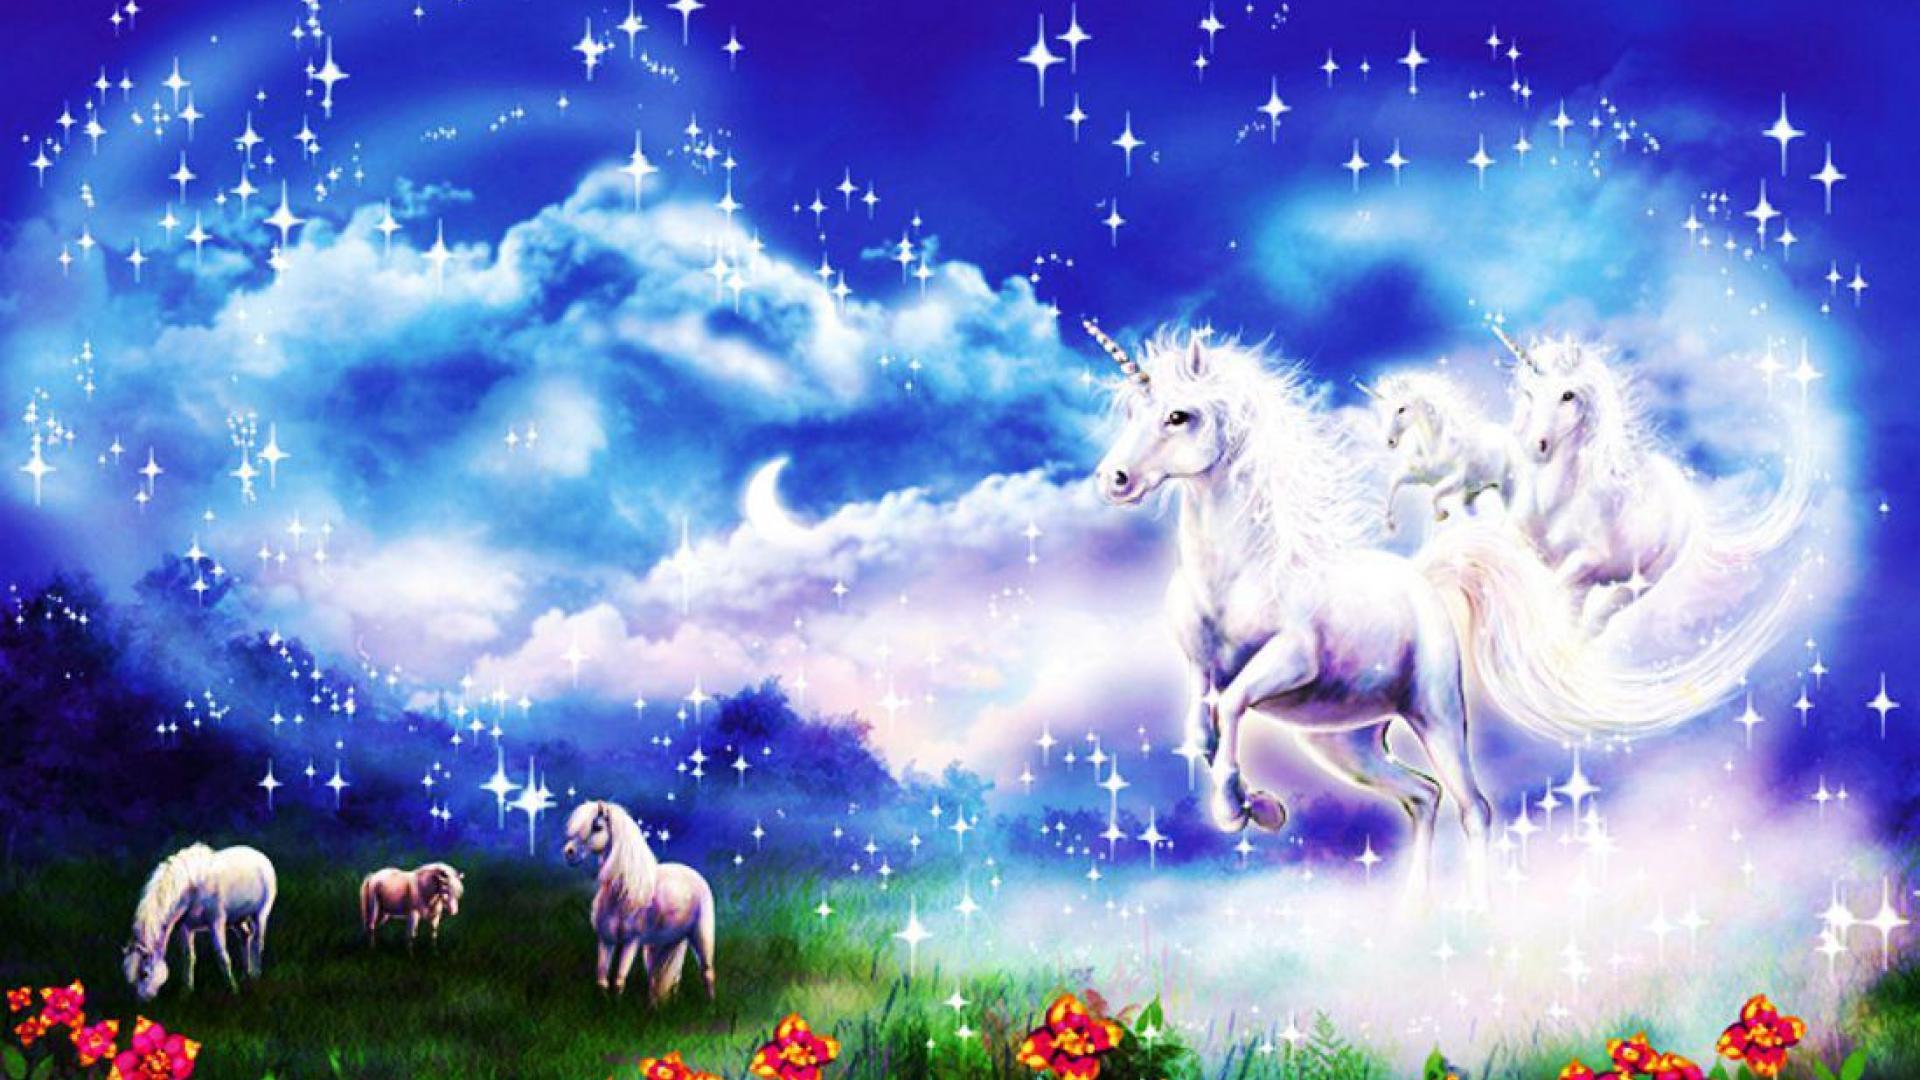 Background Galaxy Unicorn 5000x2813 Wallpaper 